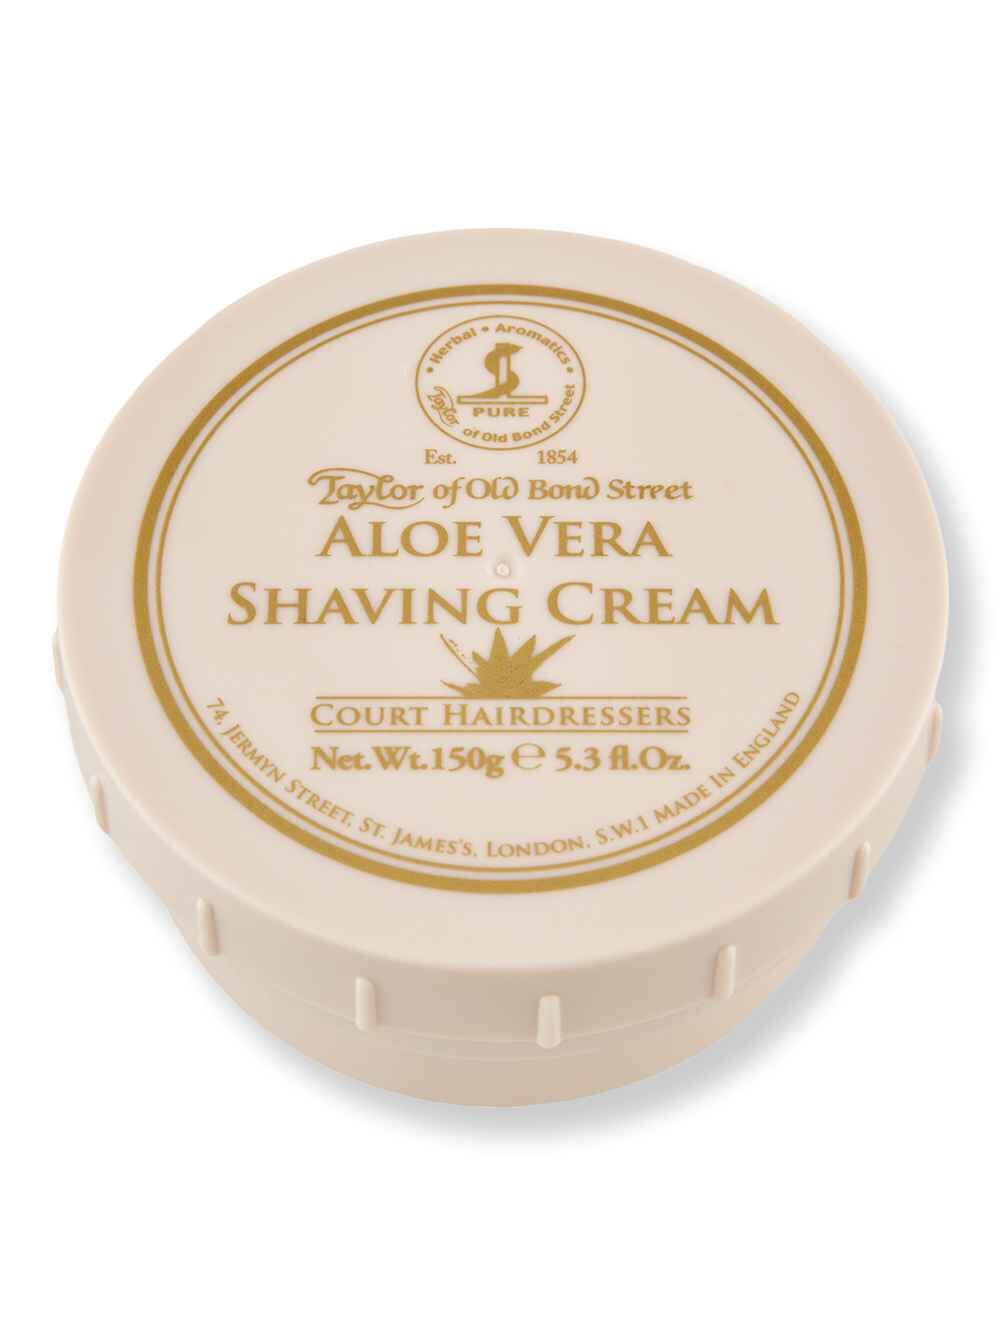 Taylor of Old Bond Street Taylor of Old Bond Street Aloe Vera Shaving Cream 150 g Shaving Creams, Lotions & Gels 